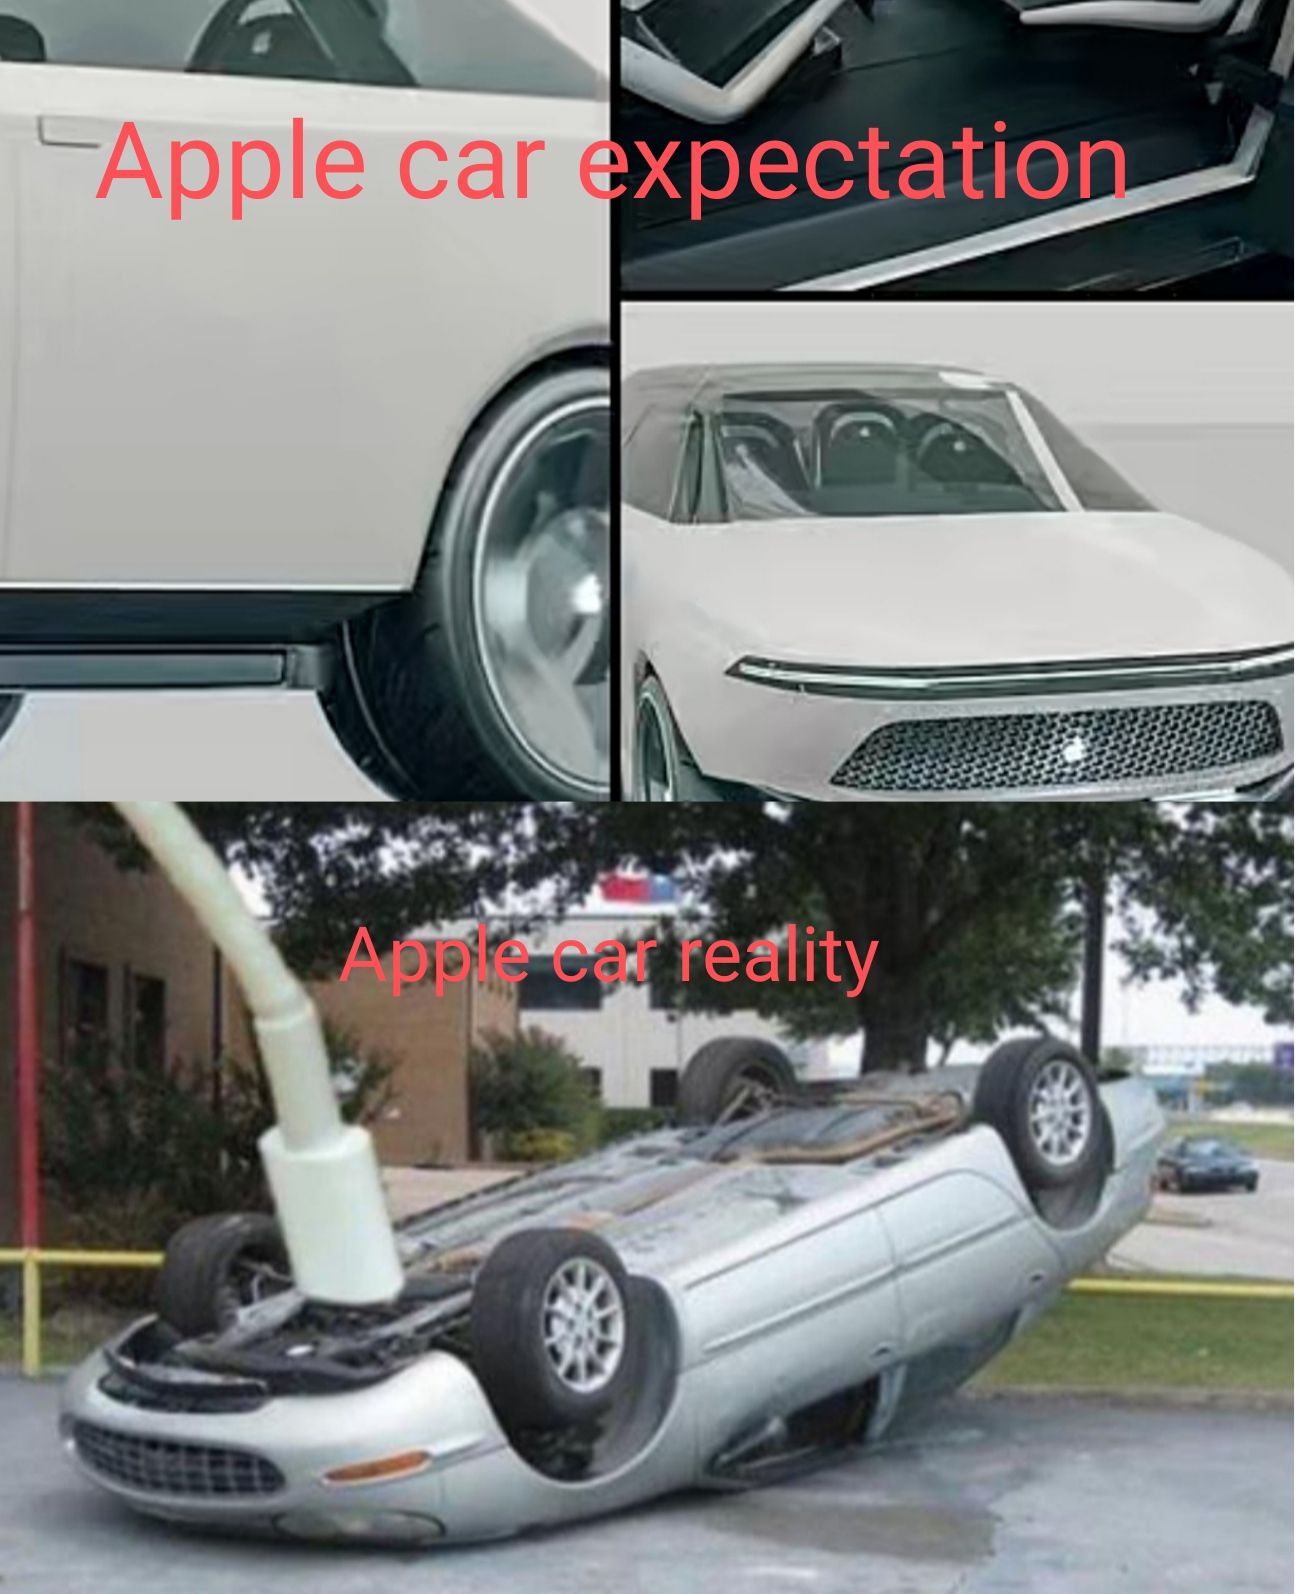 Appple car